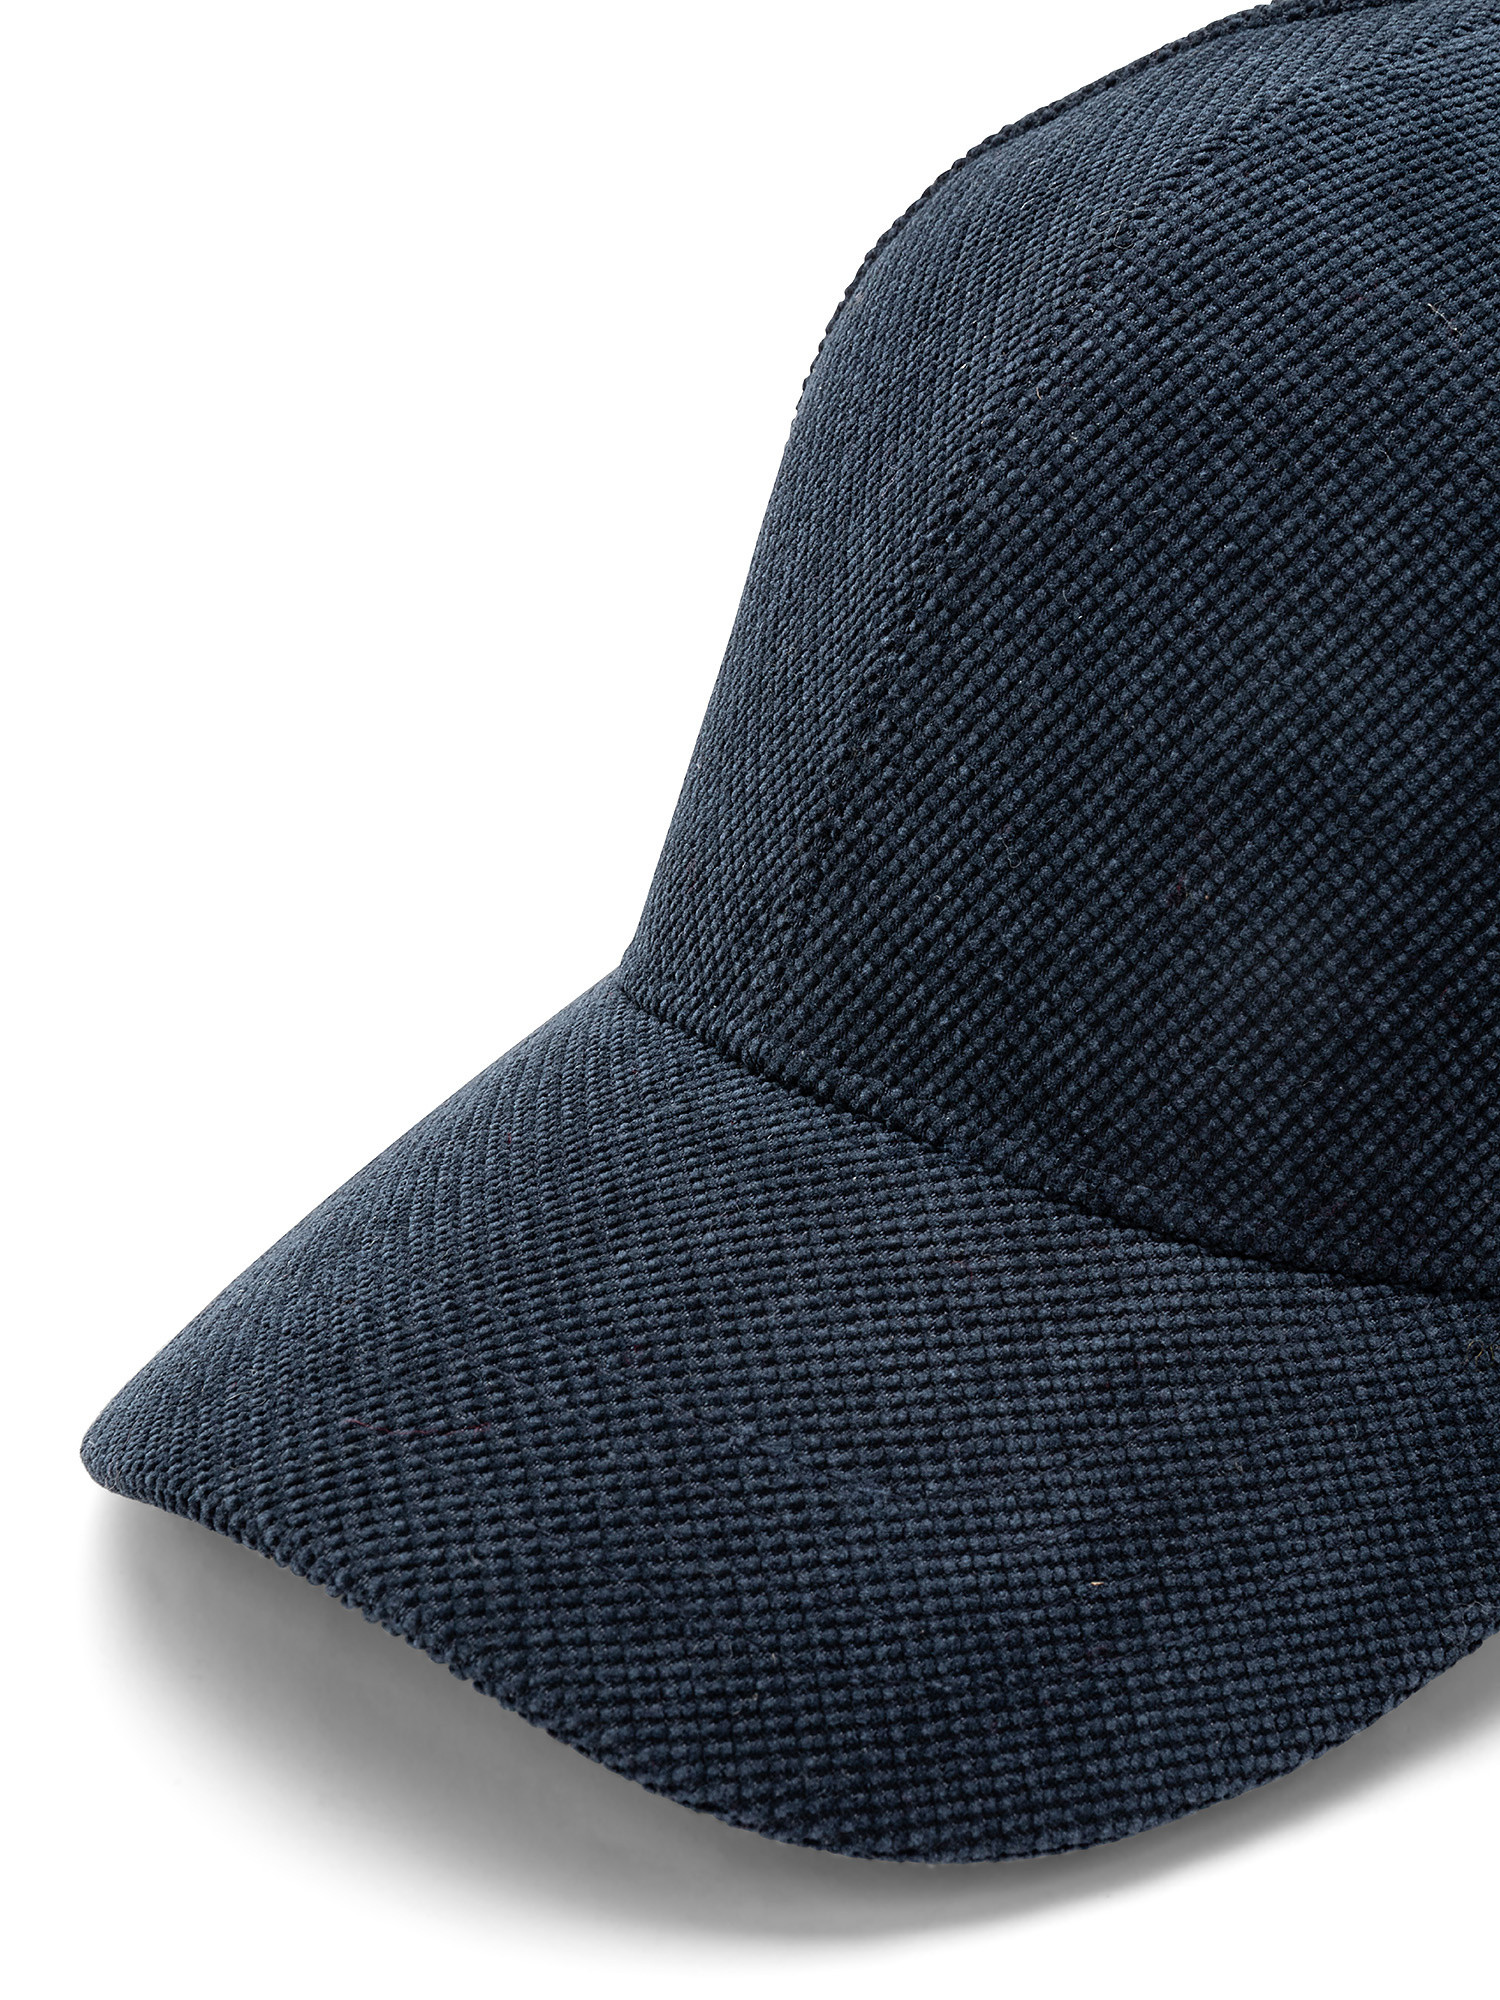 Baseball cap, Blue, large image number 1